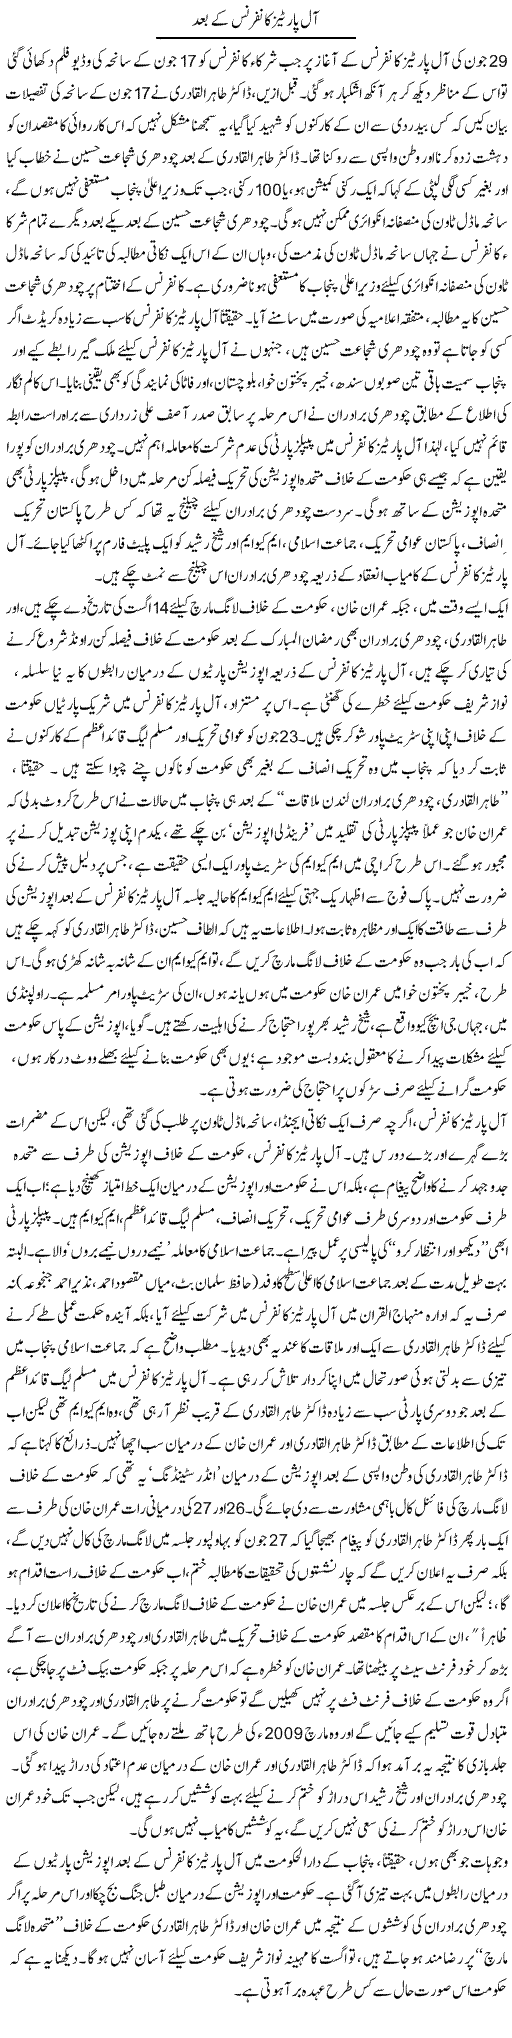 All Parties Conference Ke Baad | Asghar Abdullah | Daily Urdu Columns